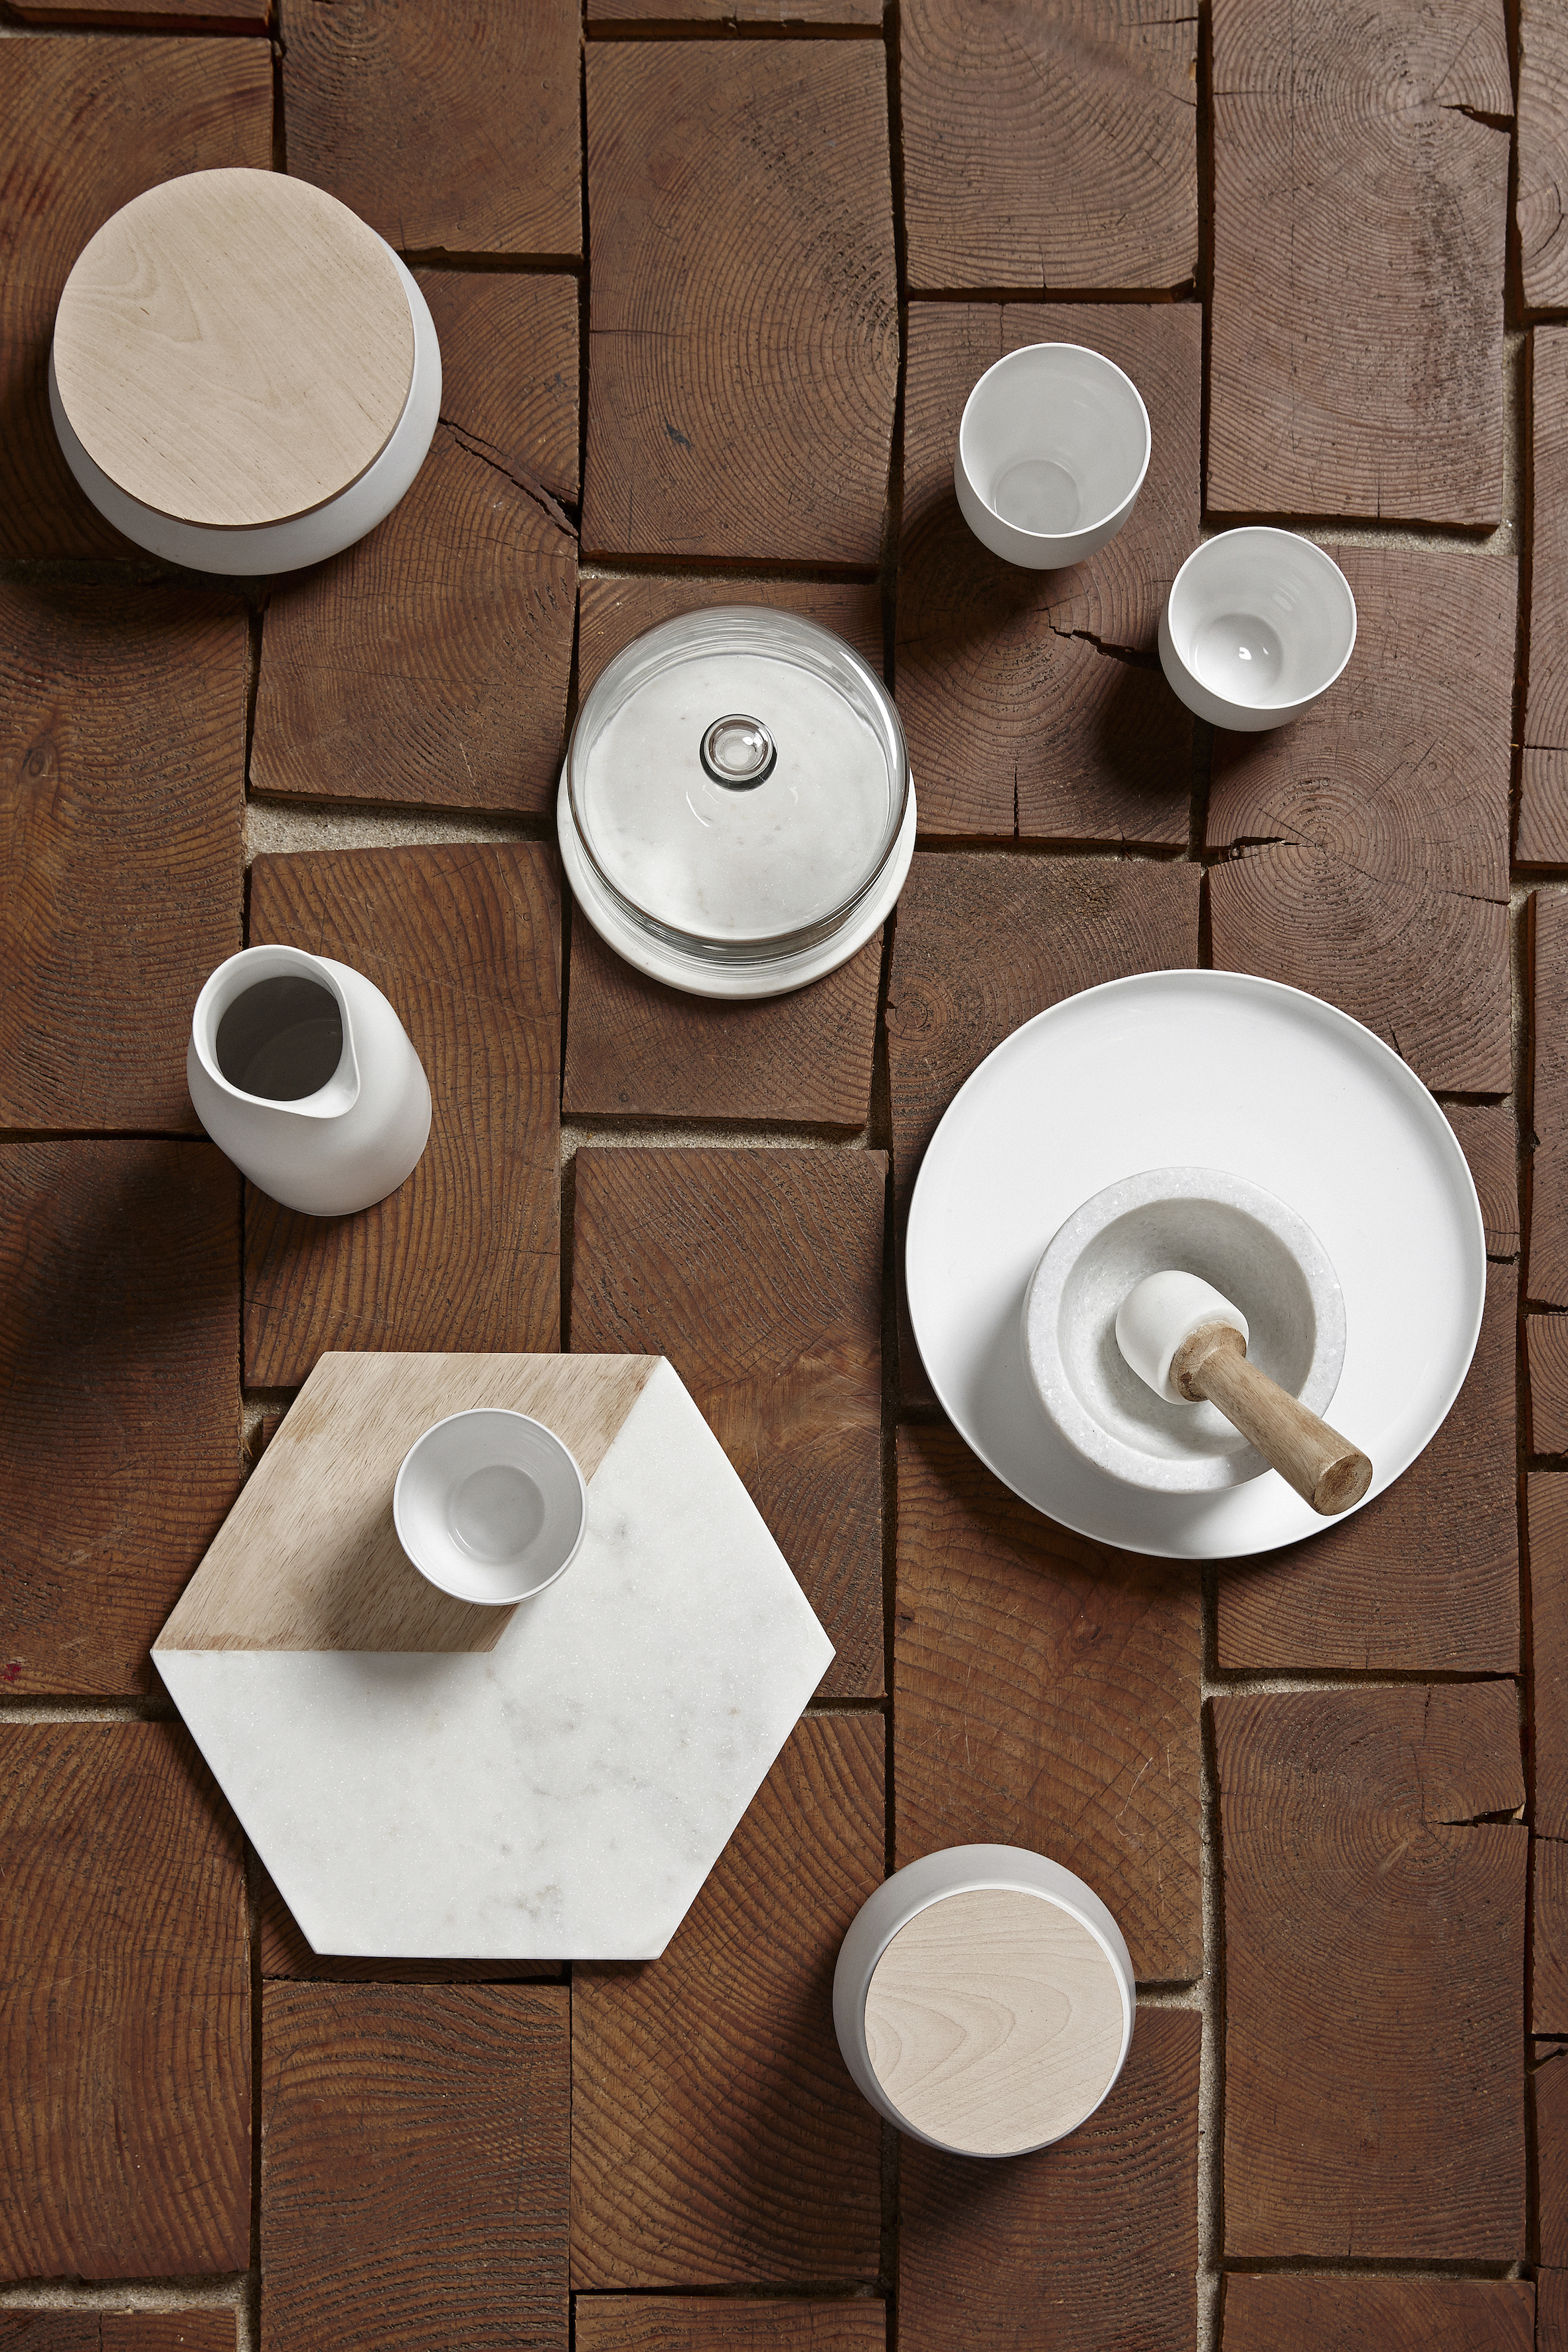 Fantastisk hvid keramikkrukke med naturfarvet trælåg fra danske Hübsch